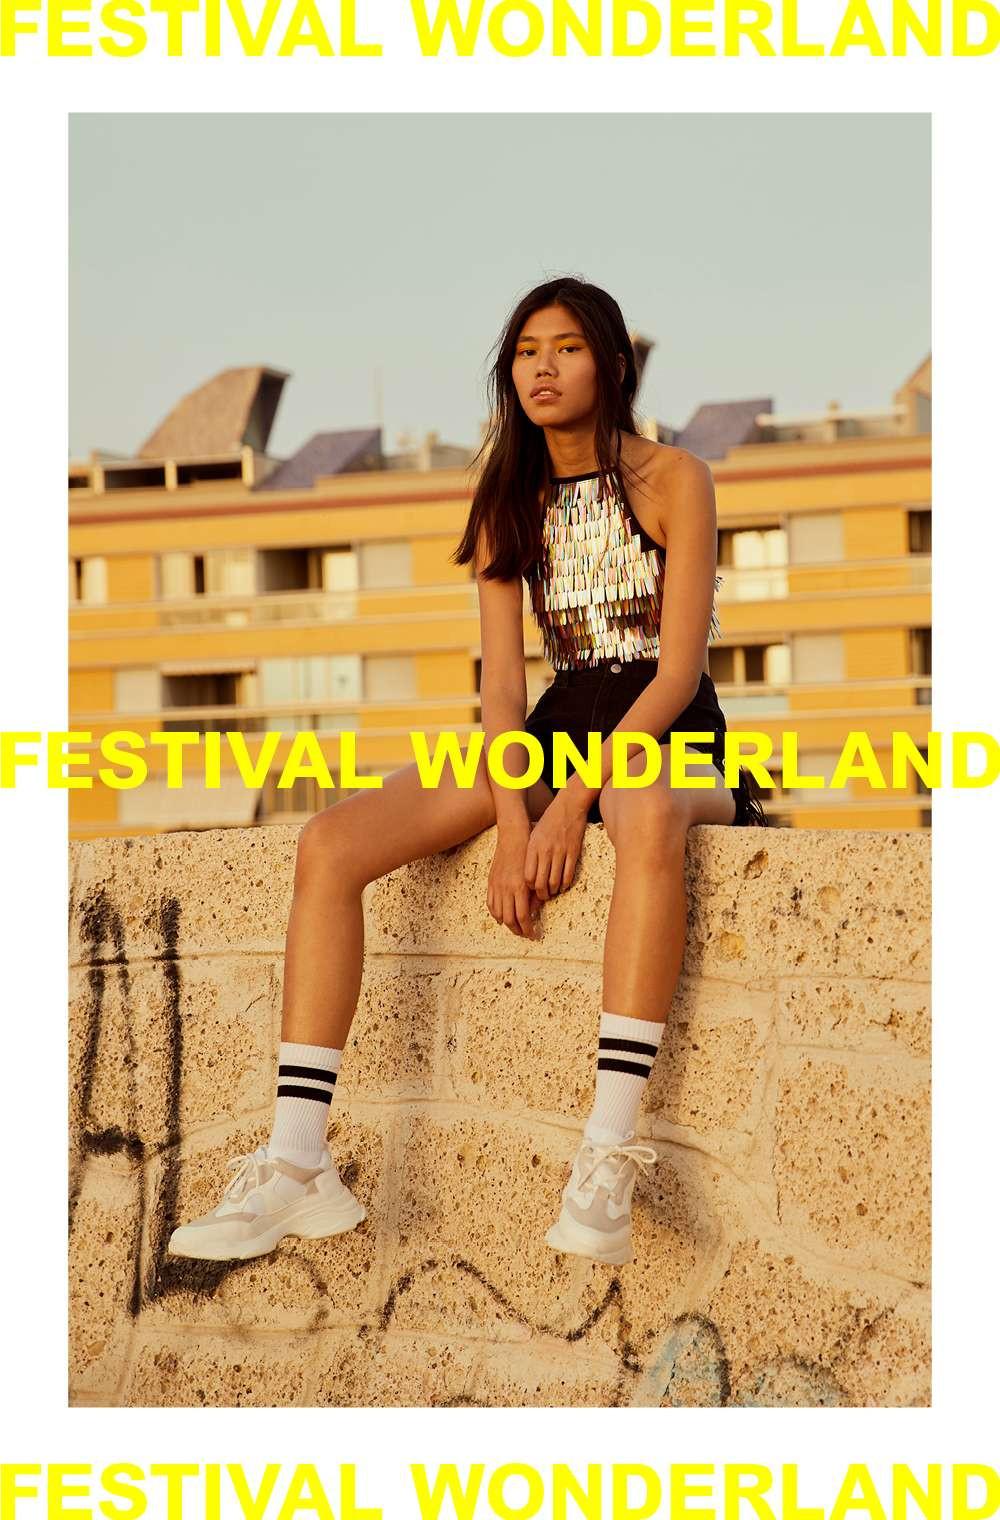 Primark Womenswear Festival Wonderland Image